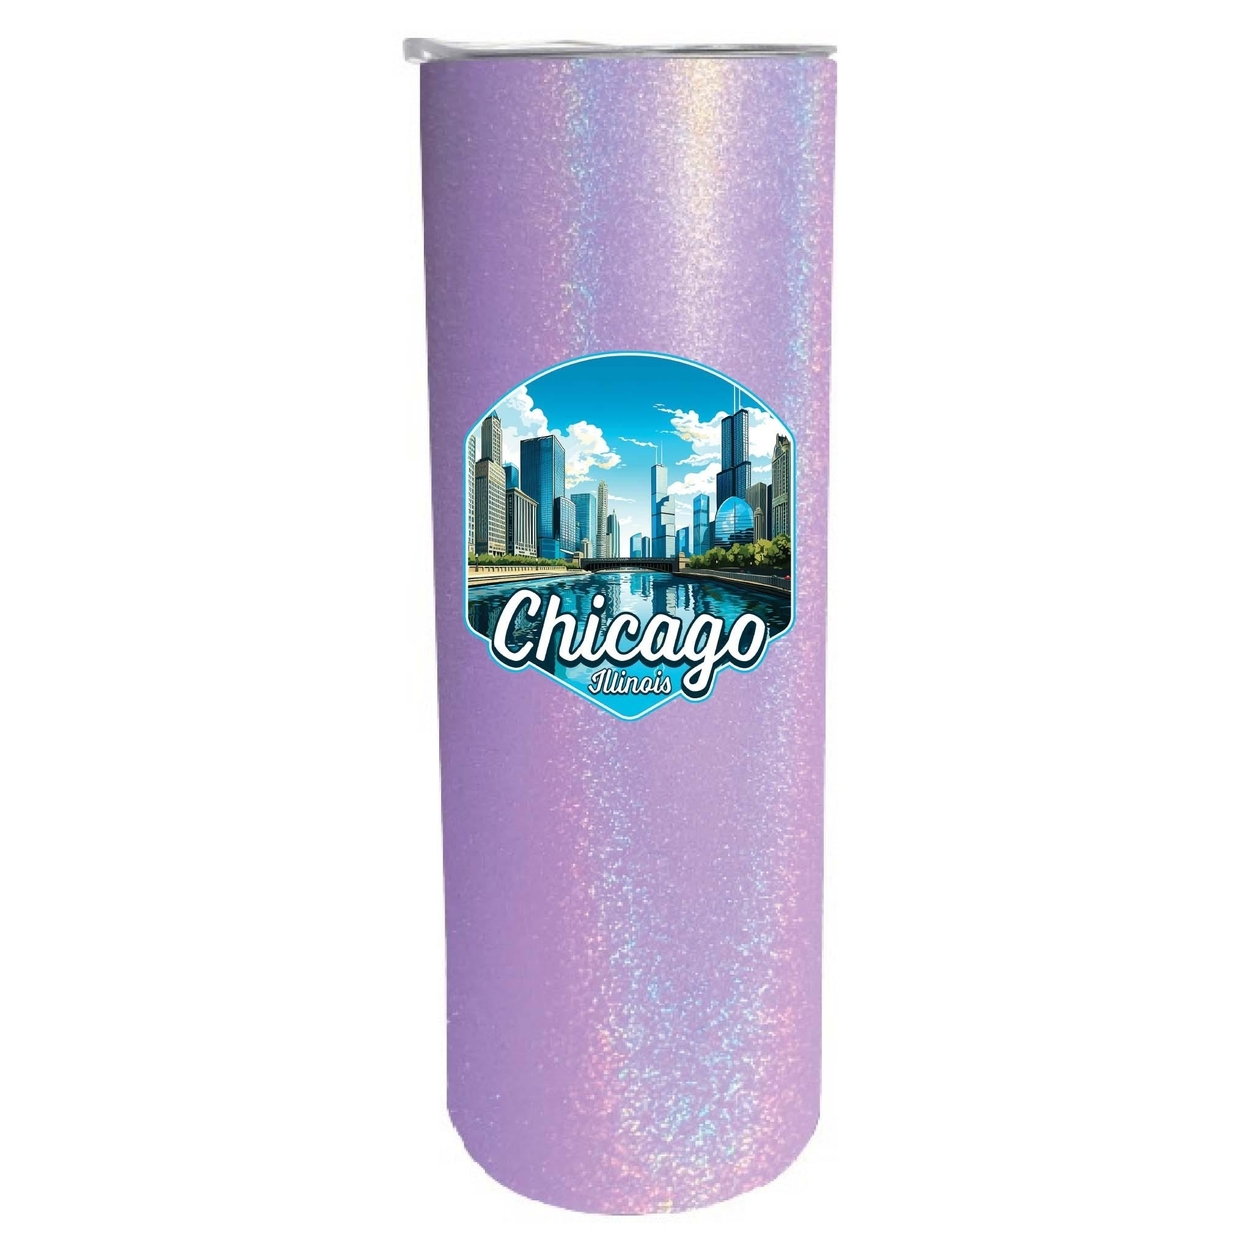 Chicago Illinois A Souvenir 20 Oz Insulated Skinny Tumbler - Purple Glitter,,2-Pack